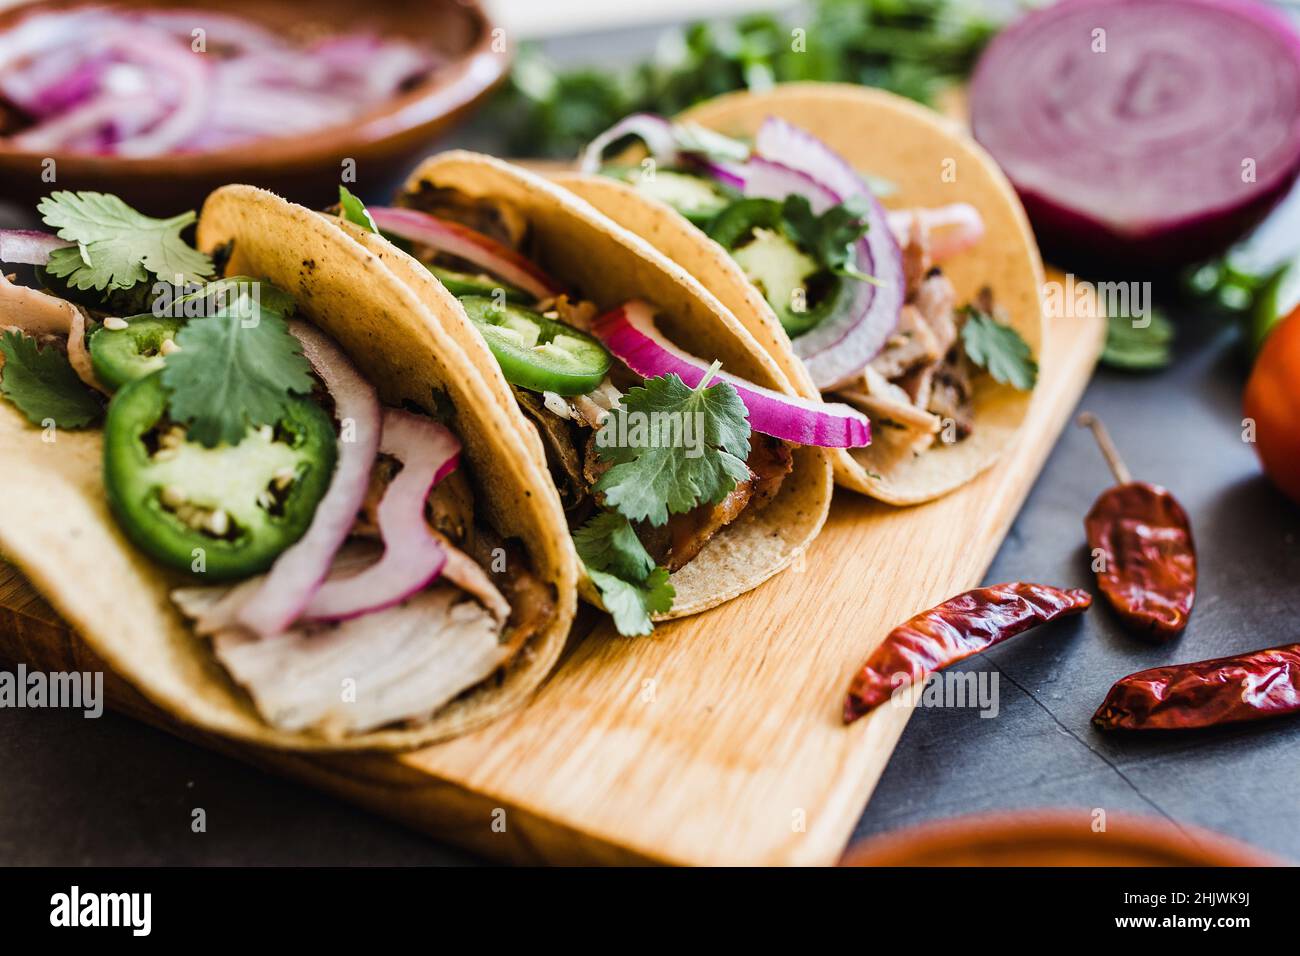 Tacos messicani ingredienti con carnitas di maiale, tortillas